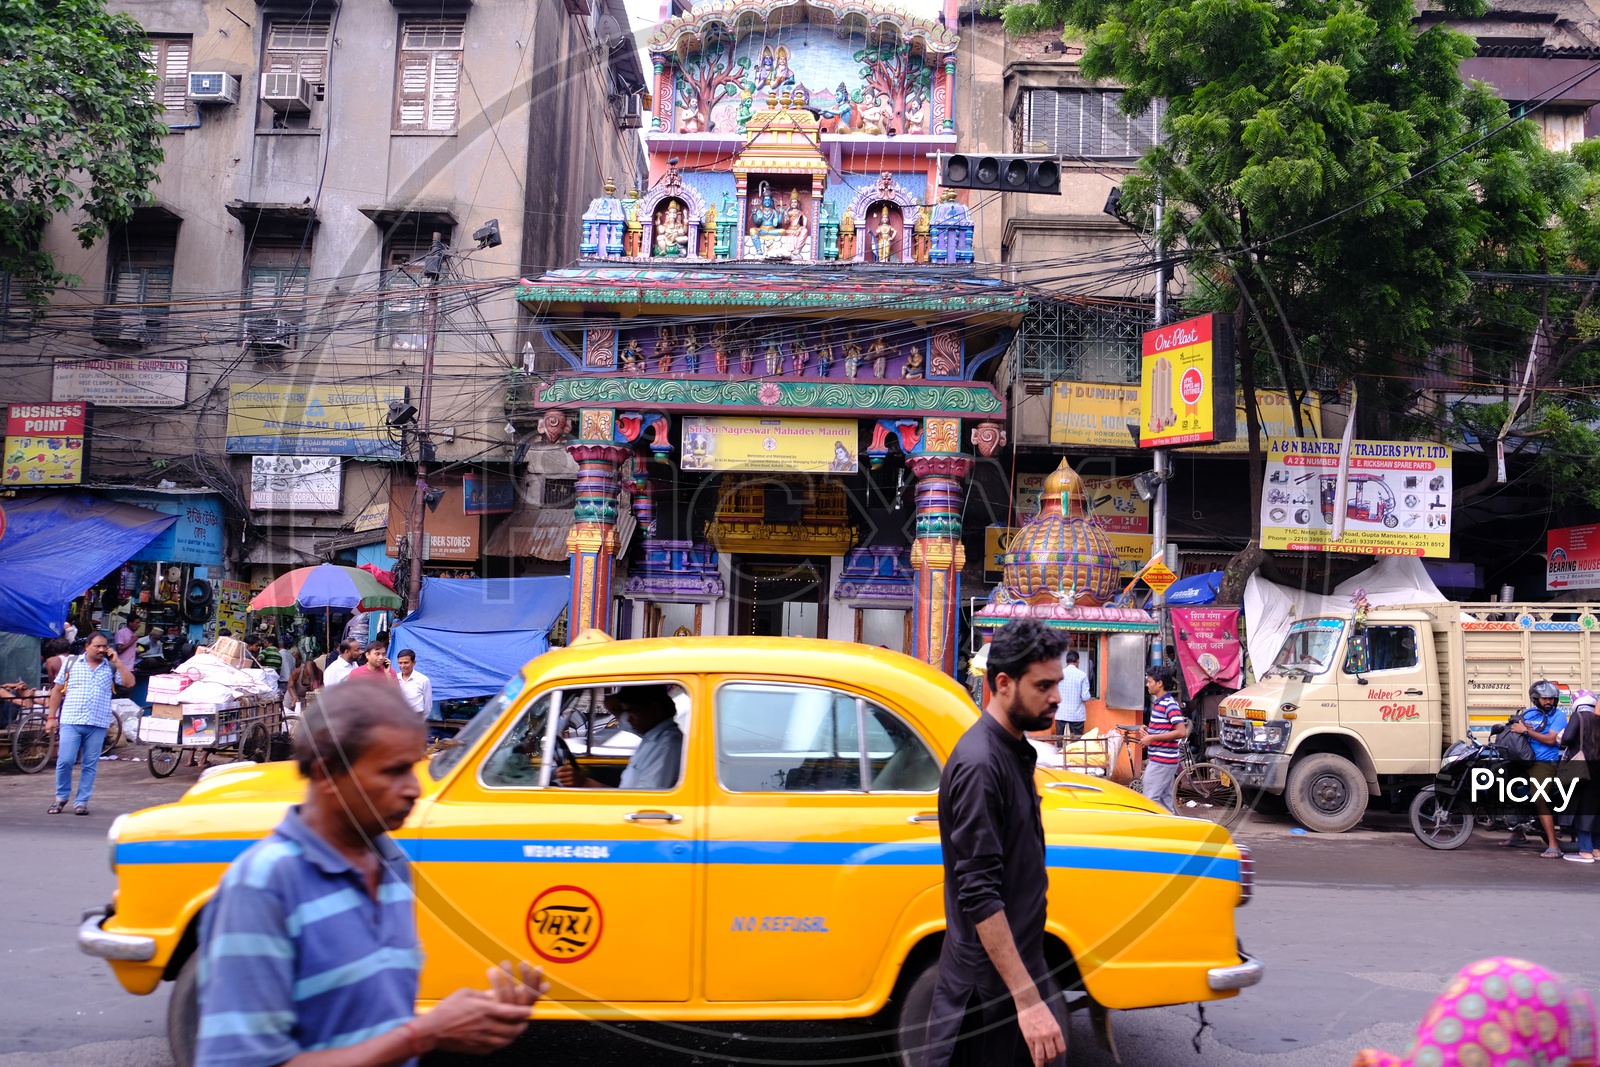 Sri Sri Nagreswar Mahadev Mandir Hindu Temple with iconic Ambassador Kolkatta Taxi in foreground